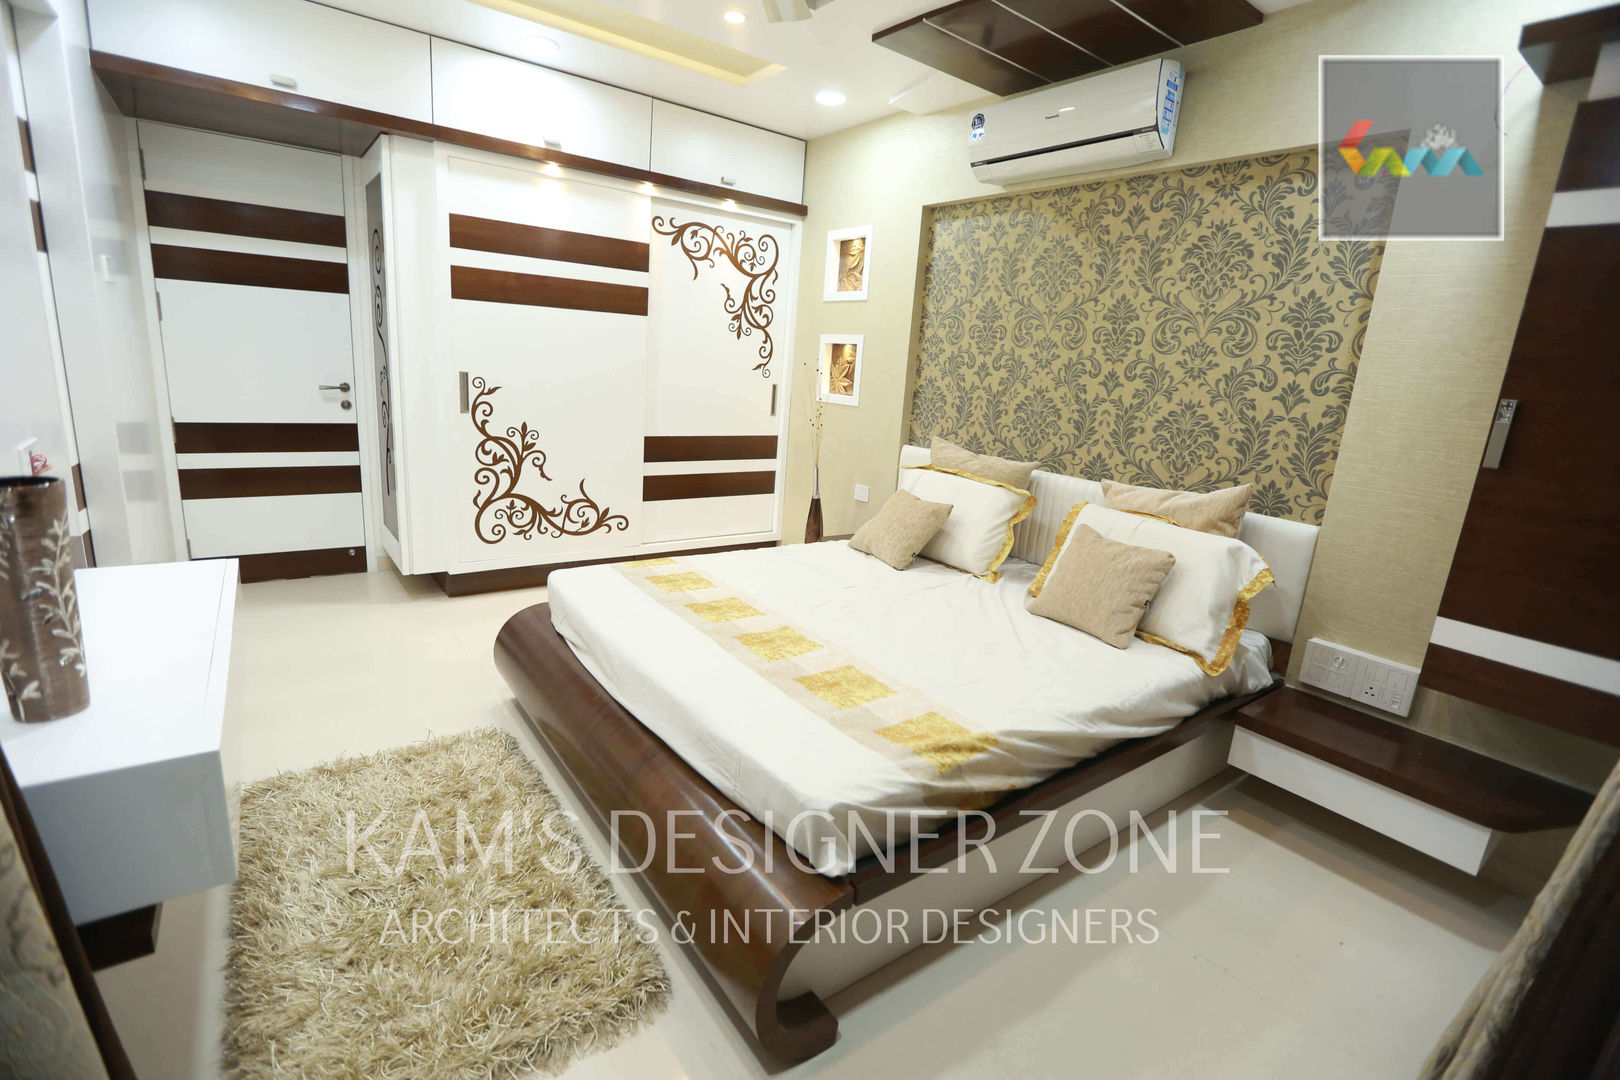 Home interior design for Satish Tayal, KAMS DESIGNER ZONE KAMS DESIGNER ZONE Chambre classique